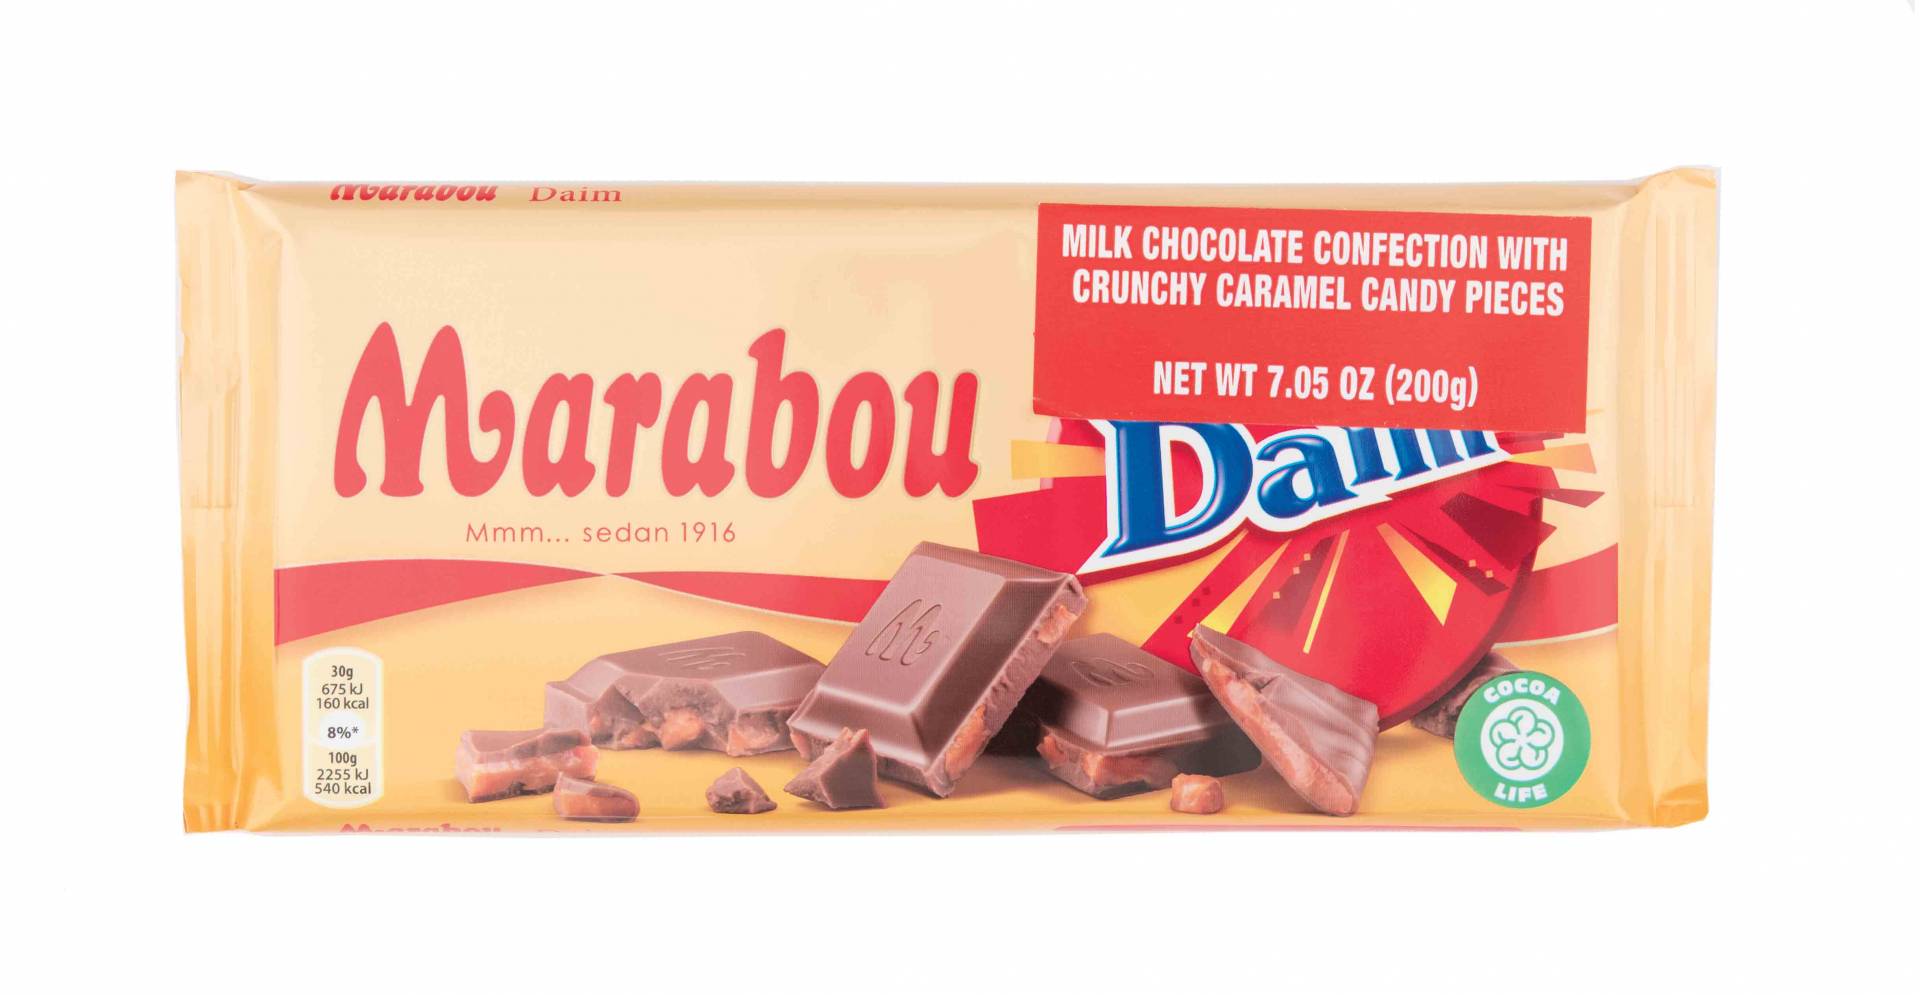 Swedish Chocolate - Daim 200g